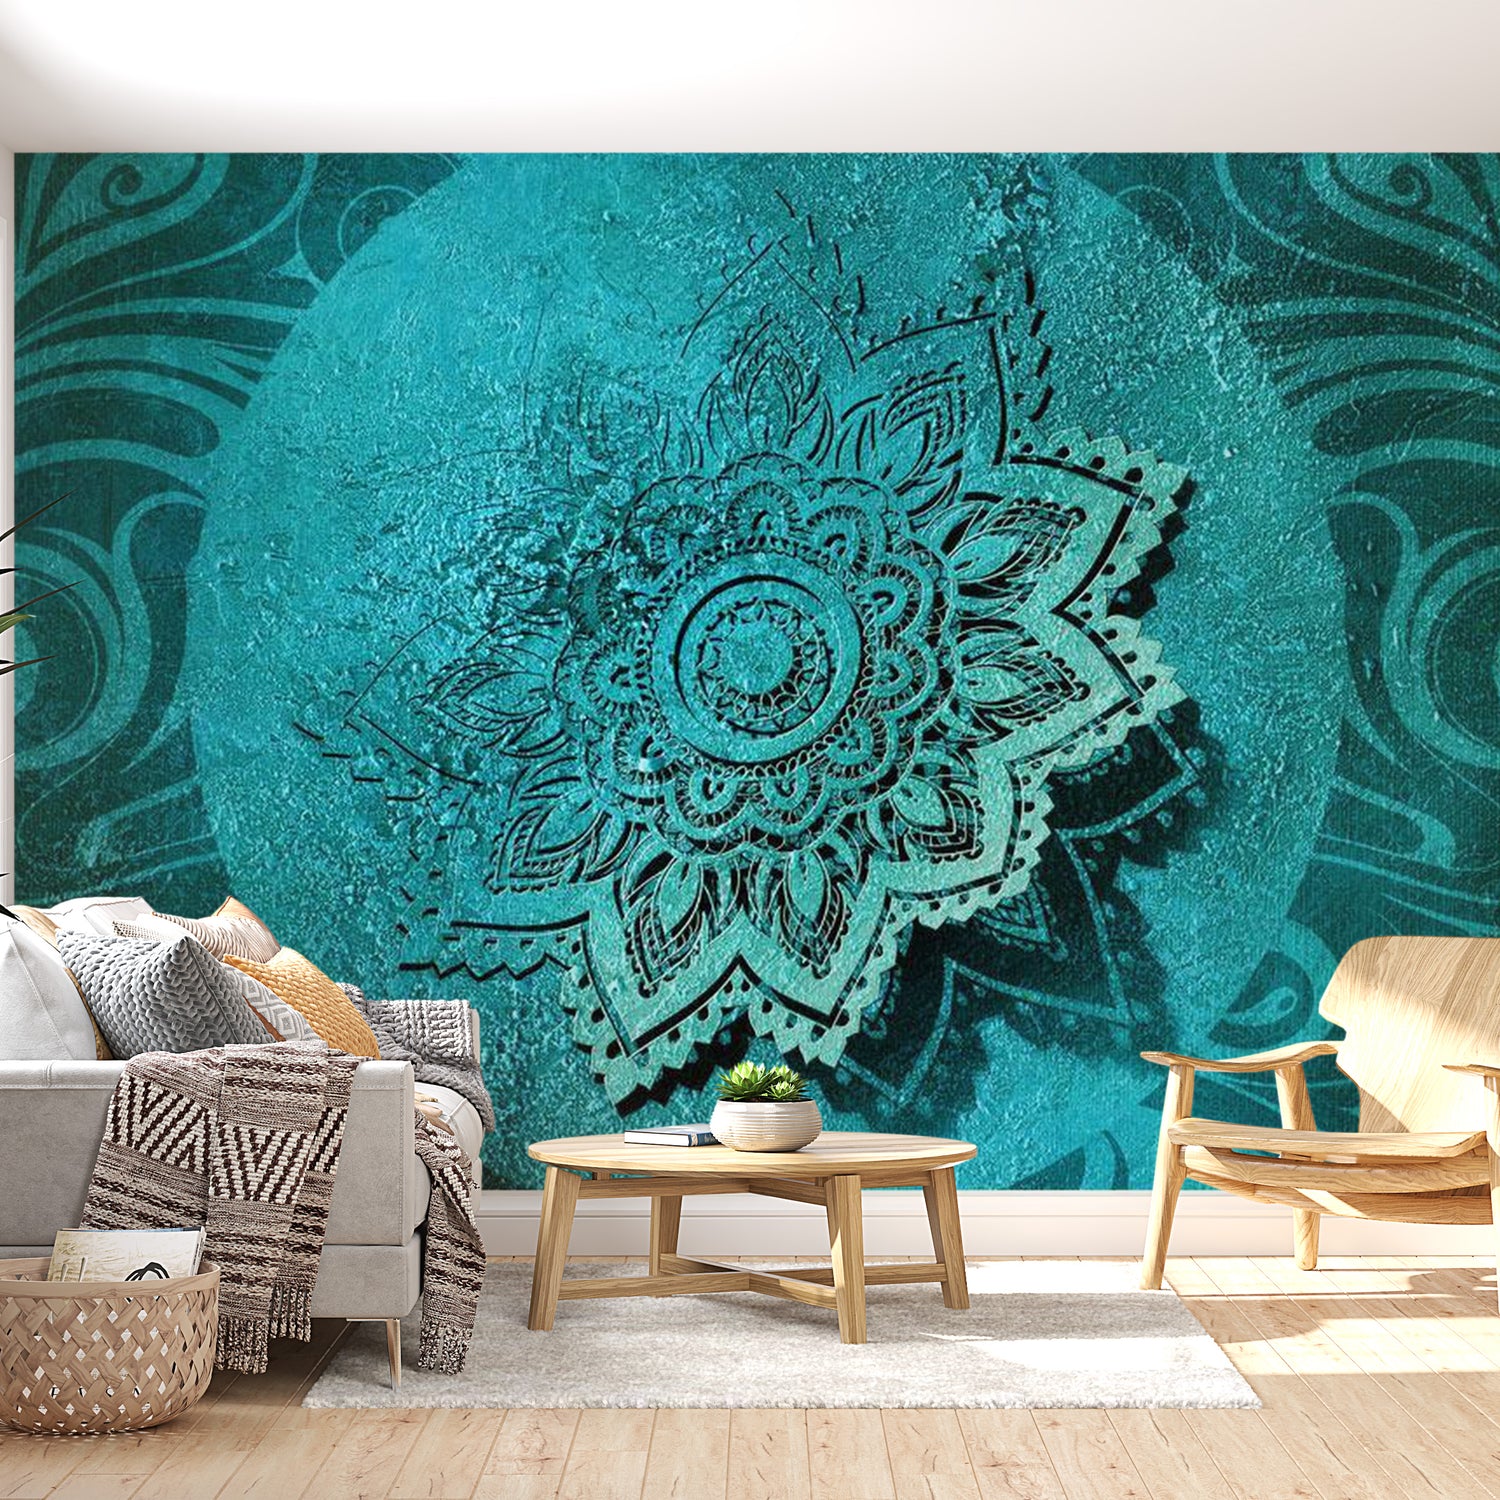 Peel & Stick Mandala Wall Mural - Azure Flower Mandala - Removable Wall Decals